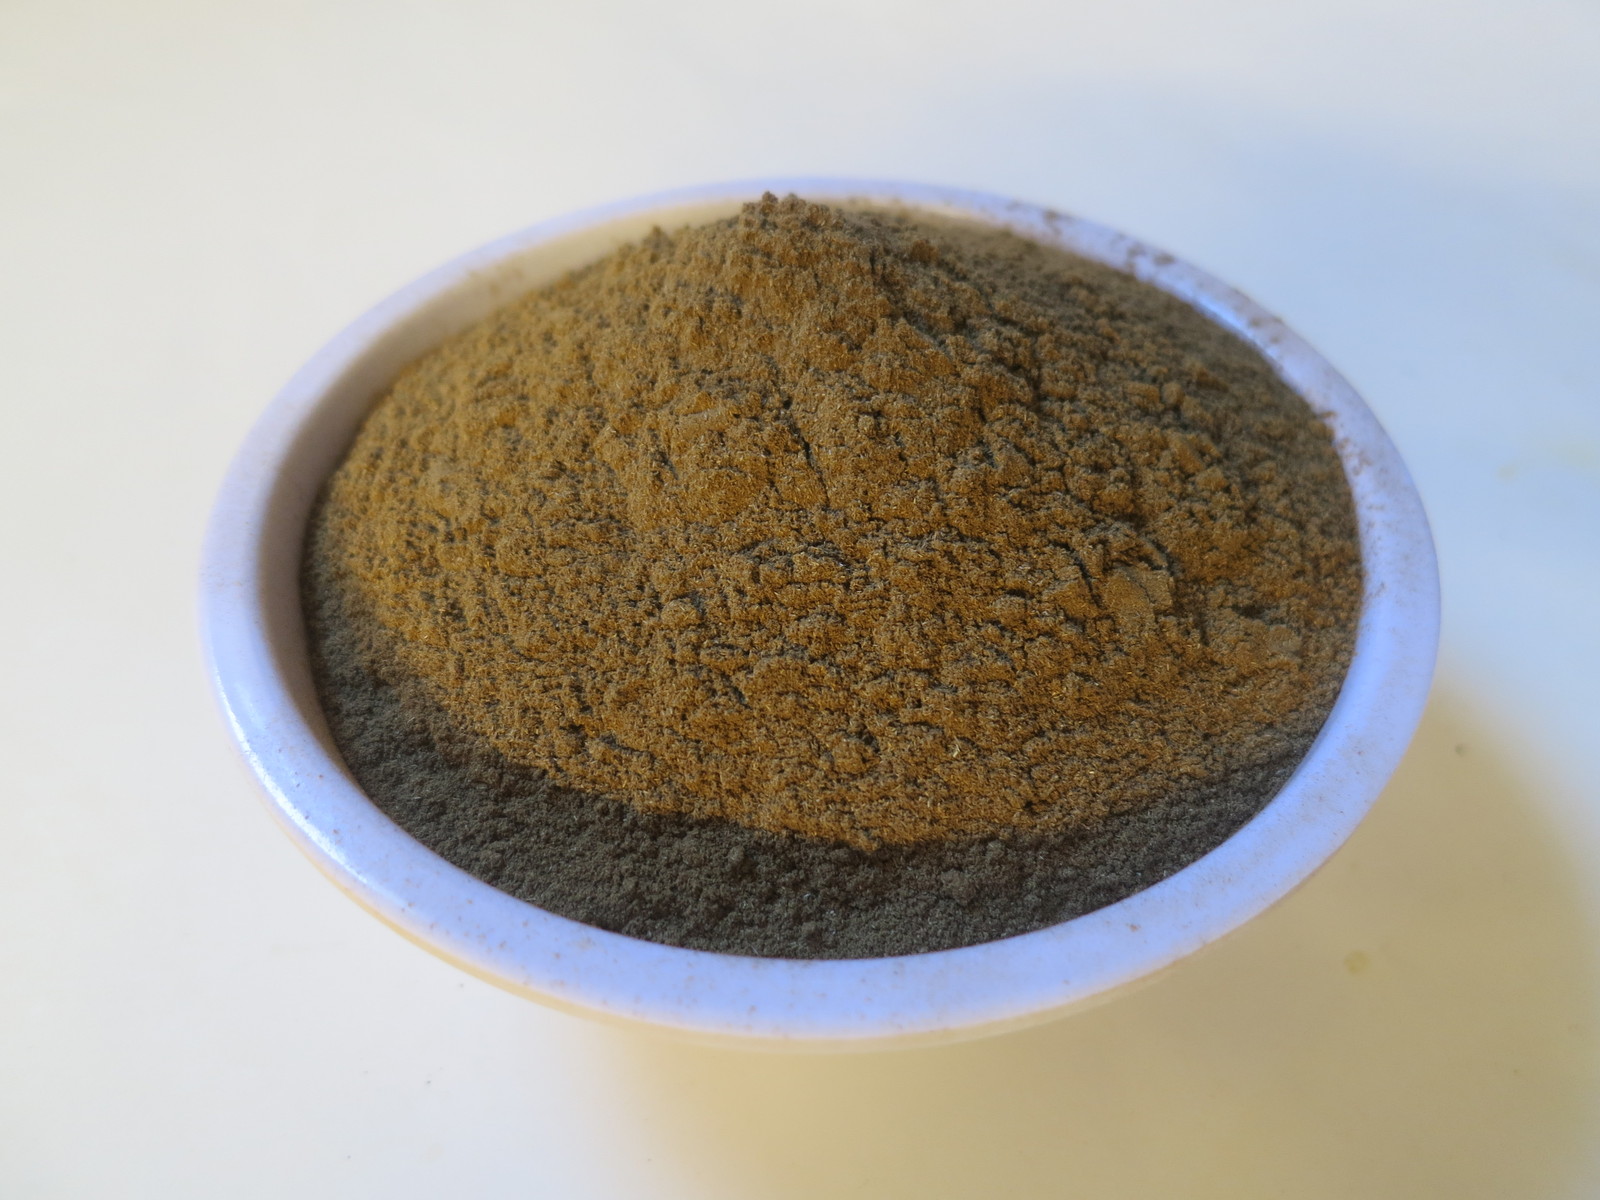 Scutellaria Laterifolia (Mad Dog Skullcap) 4:1 Powder Extract